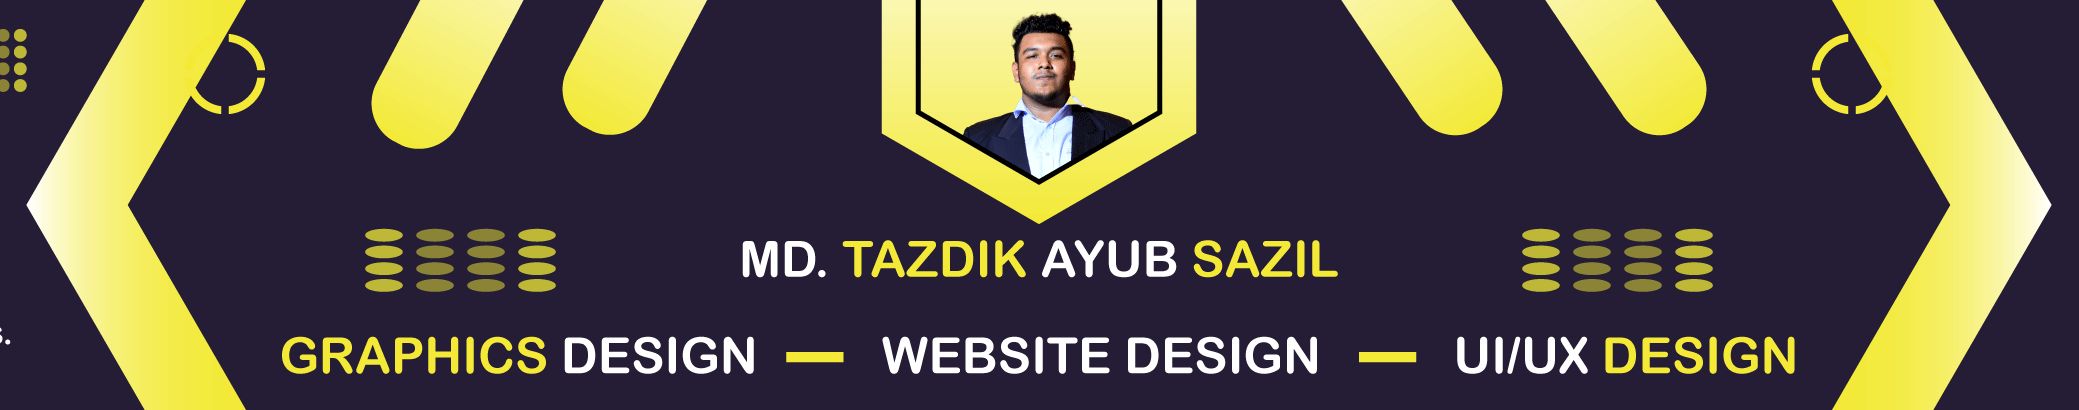 Tazdik Ayub Sazil's profile banner